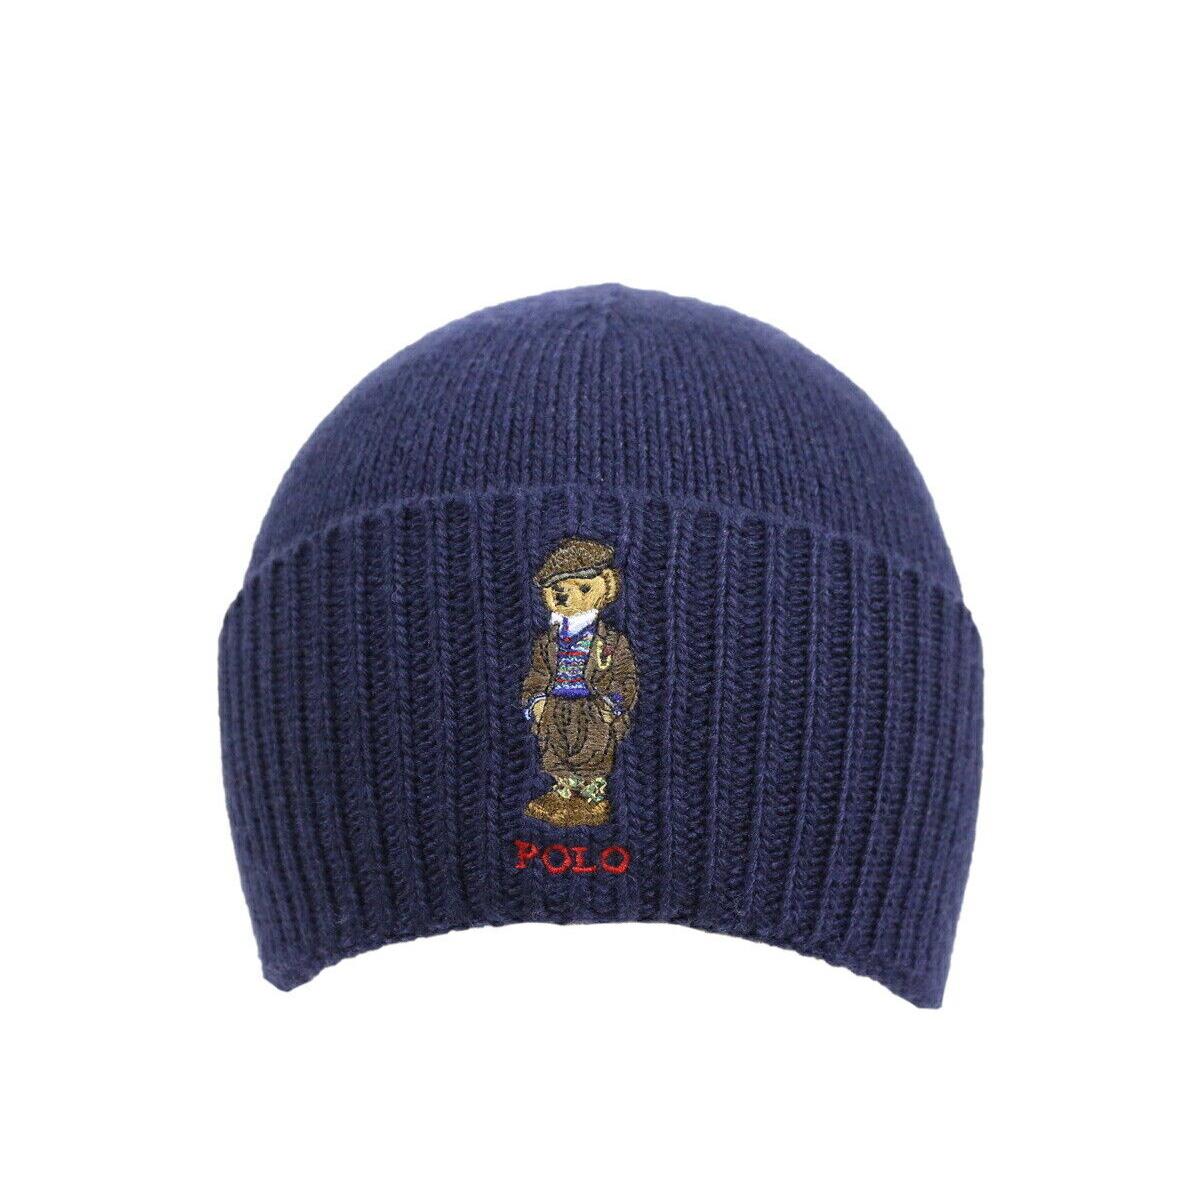 Polo Ralph Lauren Polo Bear Stocking Cap Hat Watch Cap Beanie - Navy